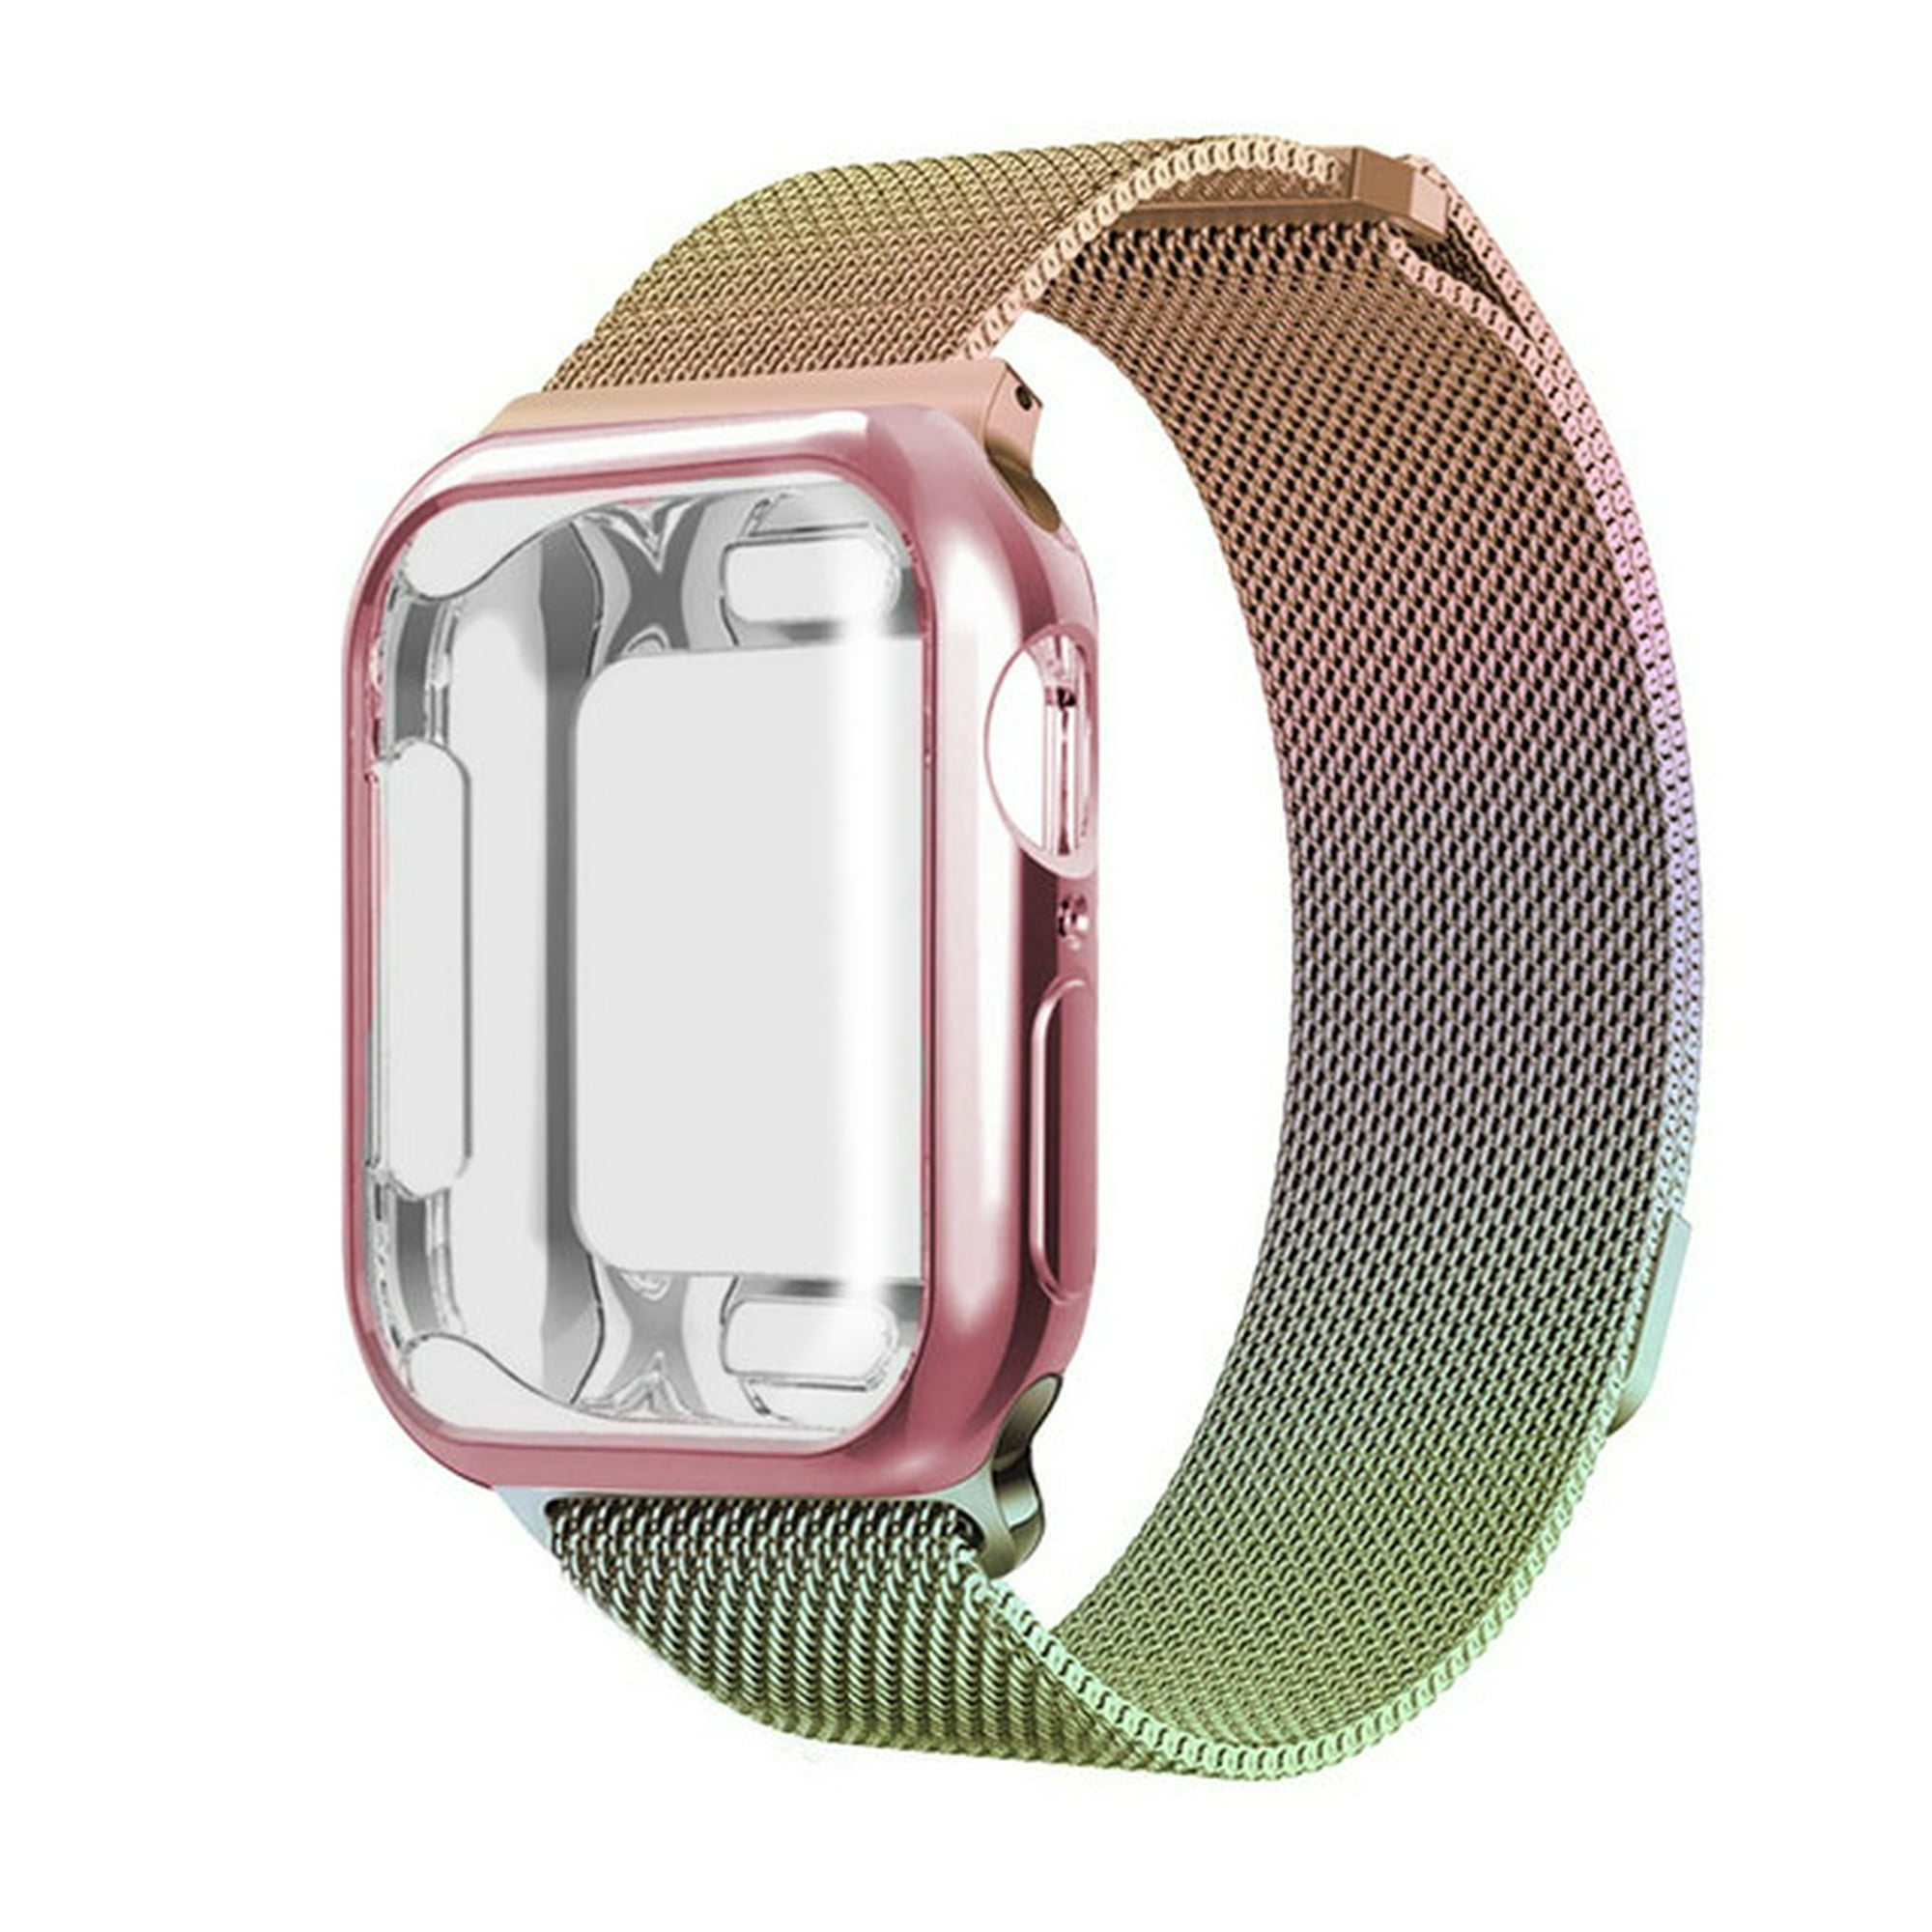 Correa metálica para apple watch de 40 mm + protector completo de pantalla (Tpu). mamá pulpo milanese mica completa